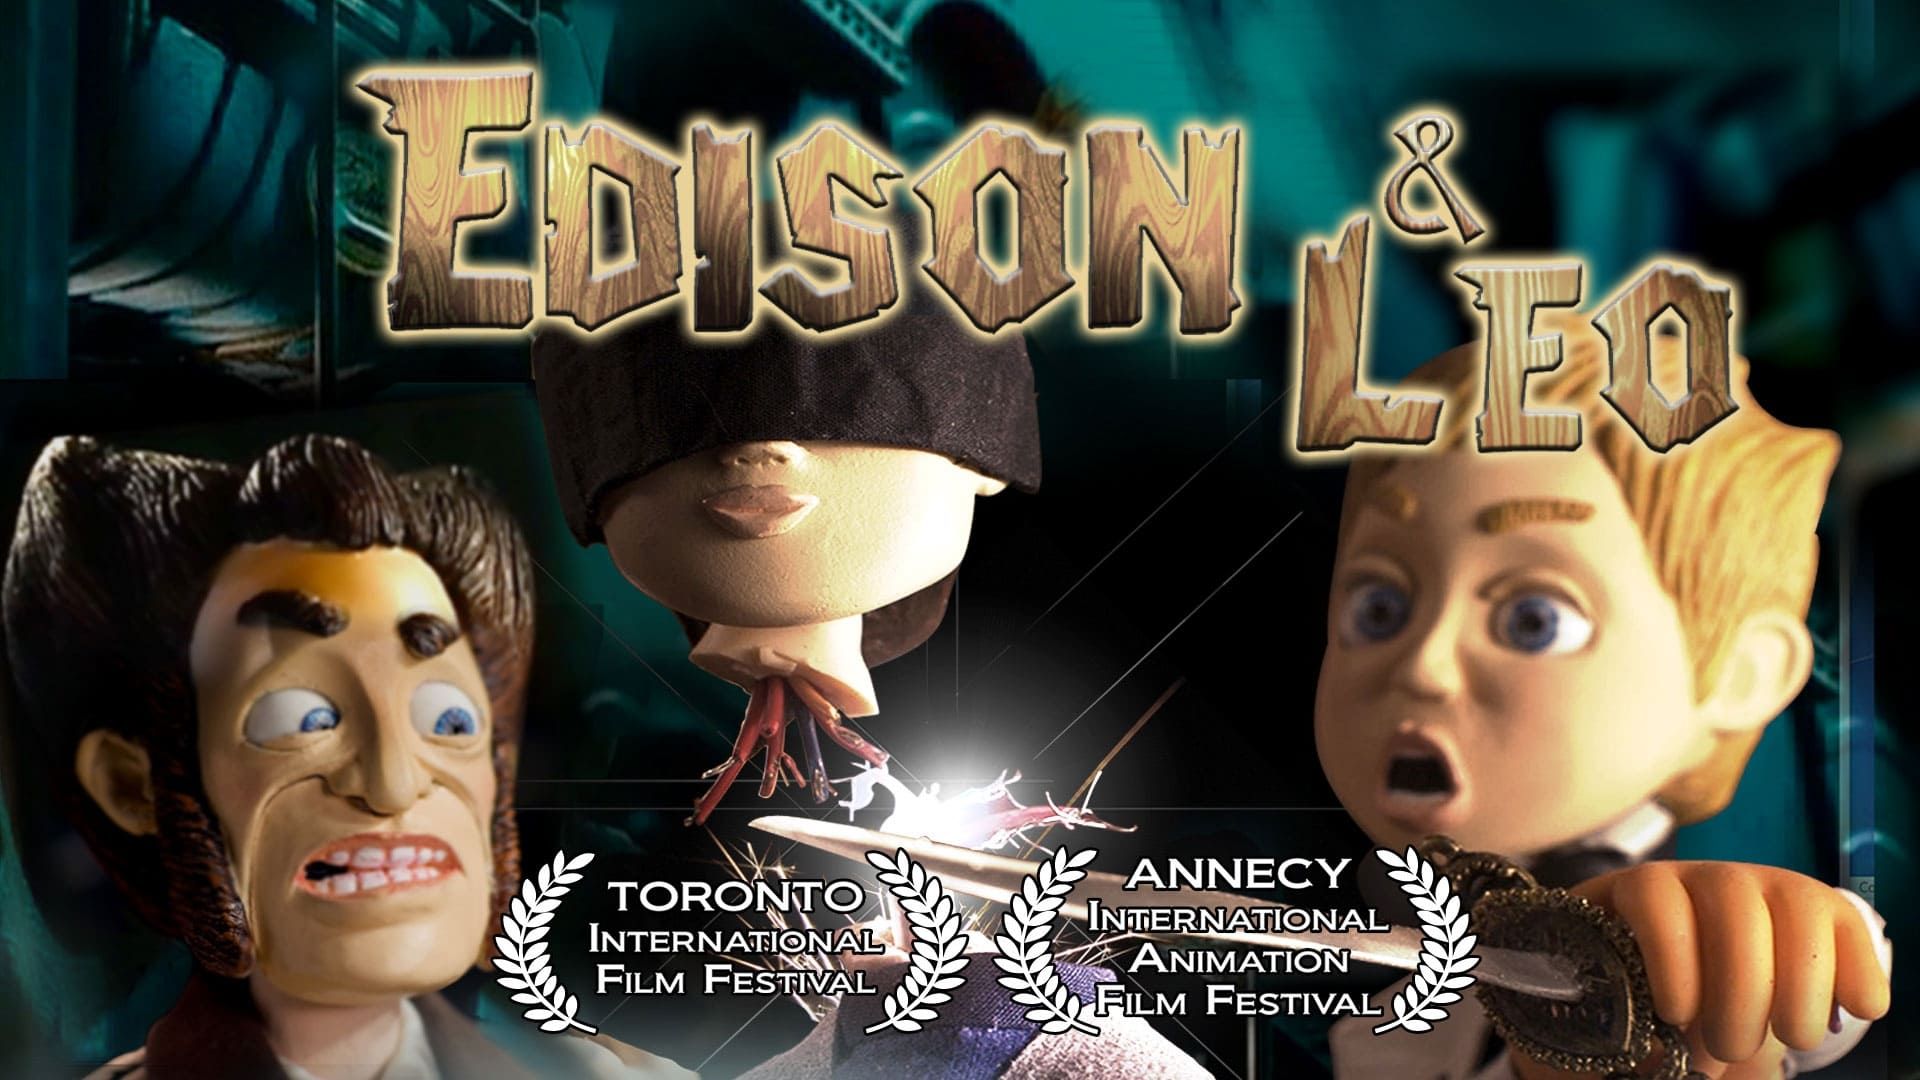 Edison & Leo background